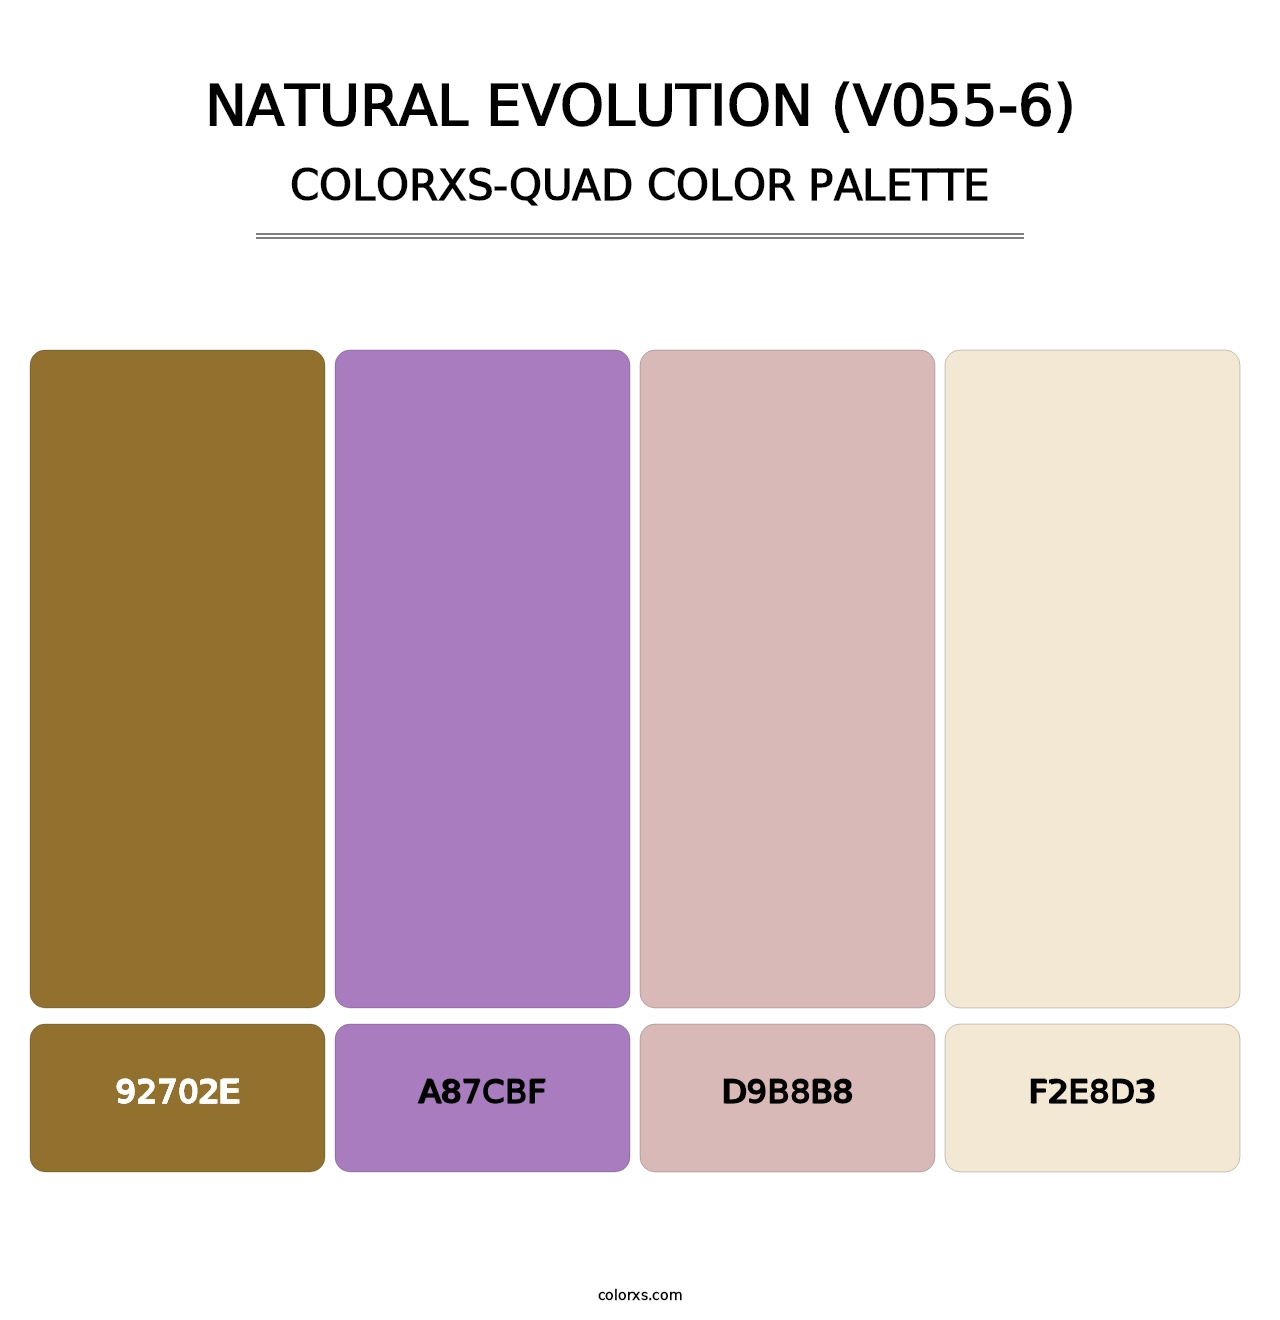 Natural Evolution (V055-6) - Colorxs Quad Palette